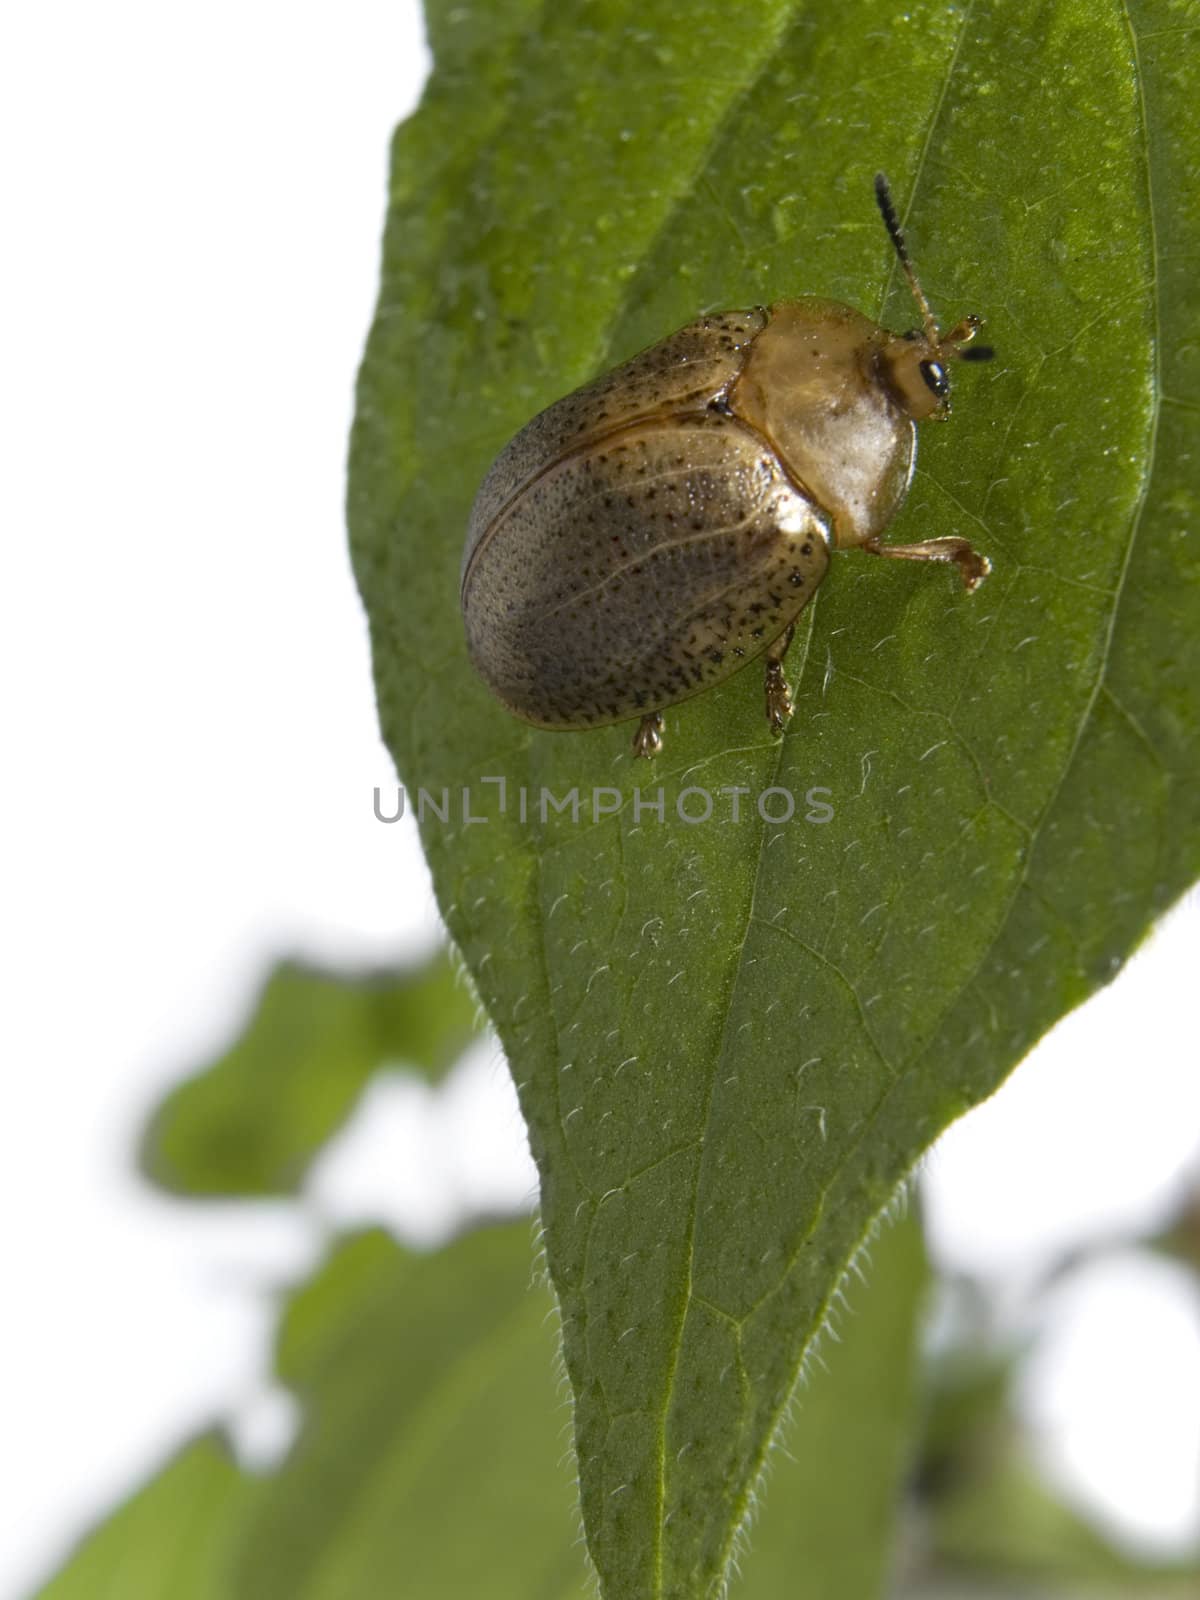 Bug on green leaf over white background.